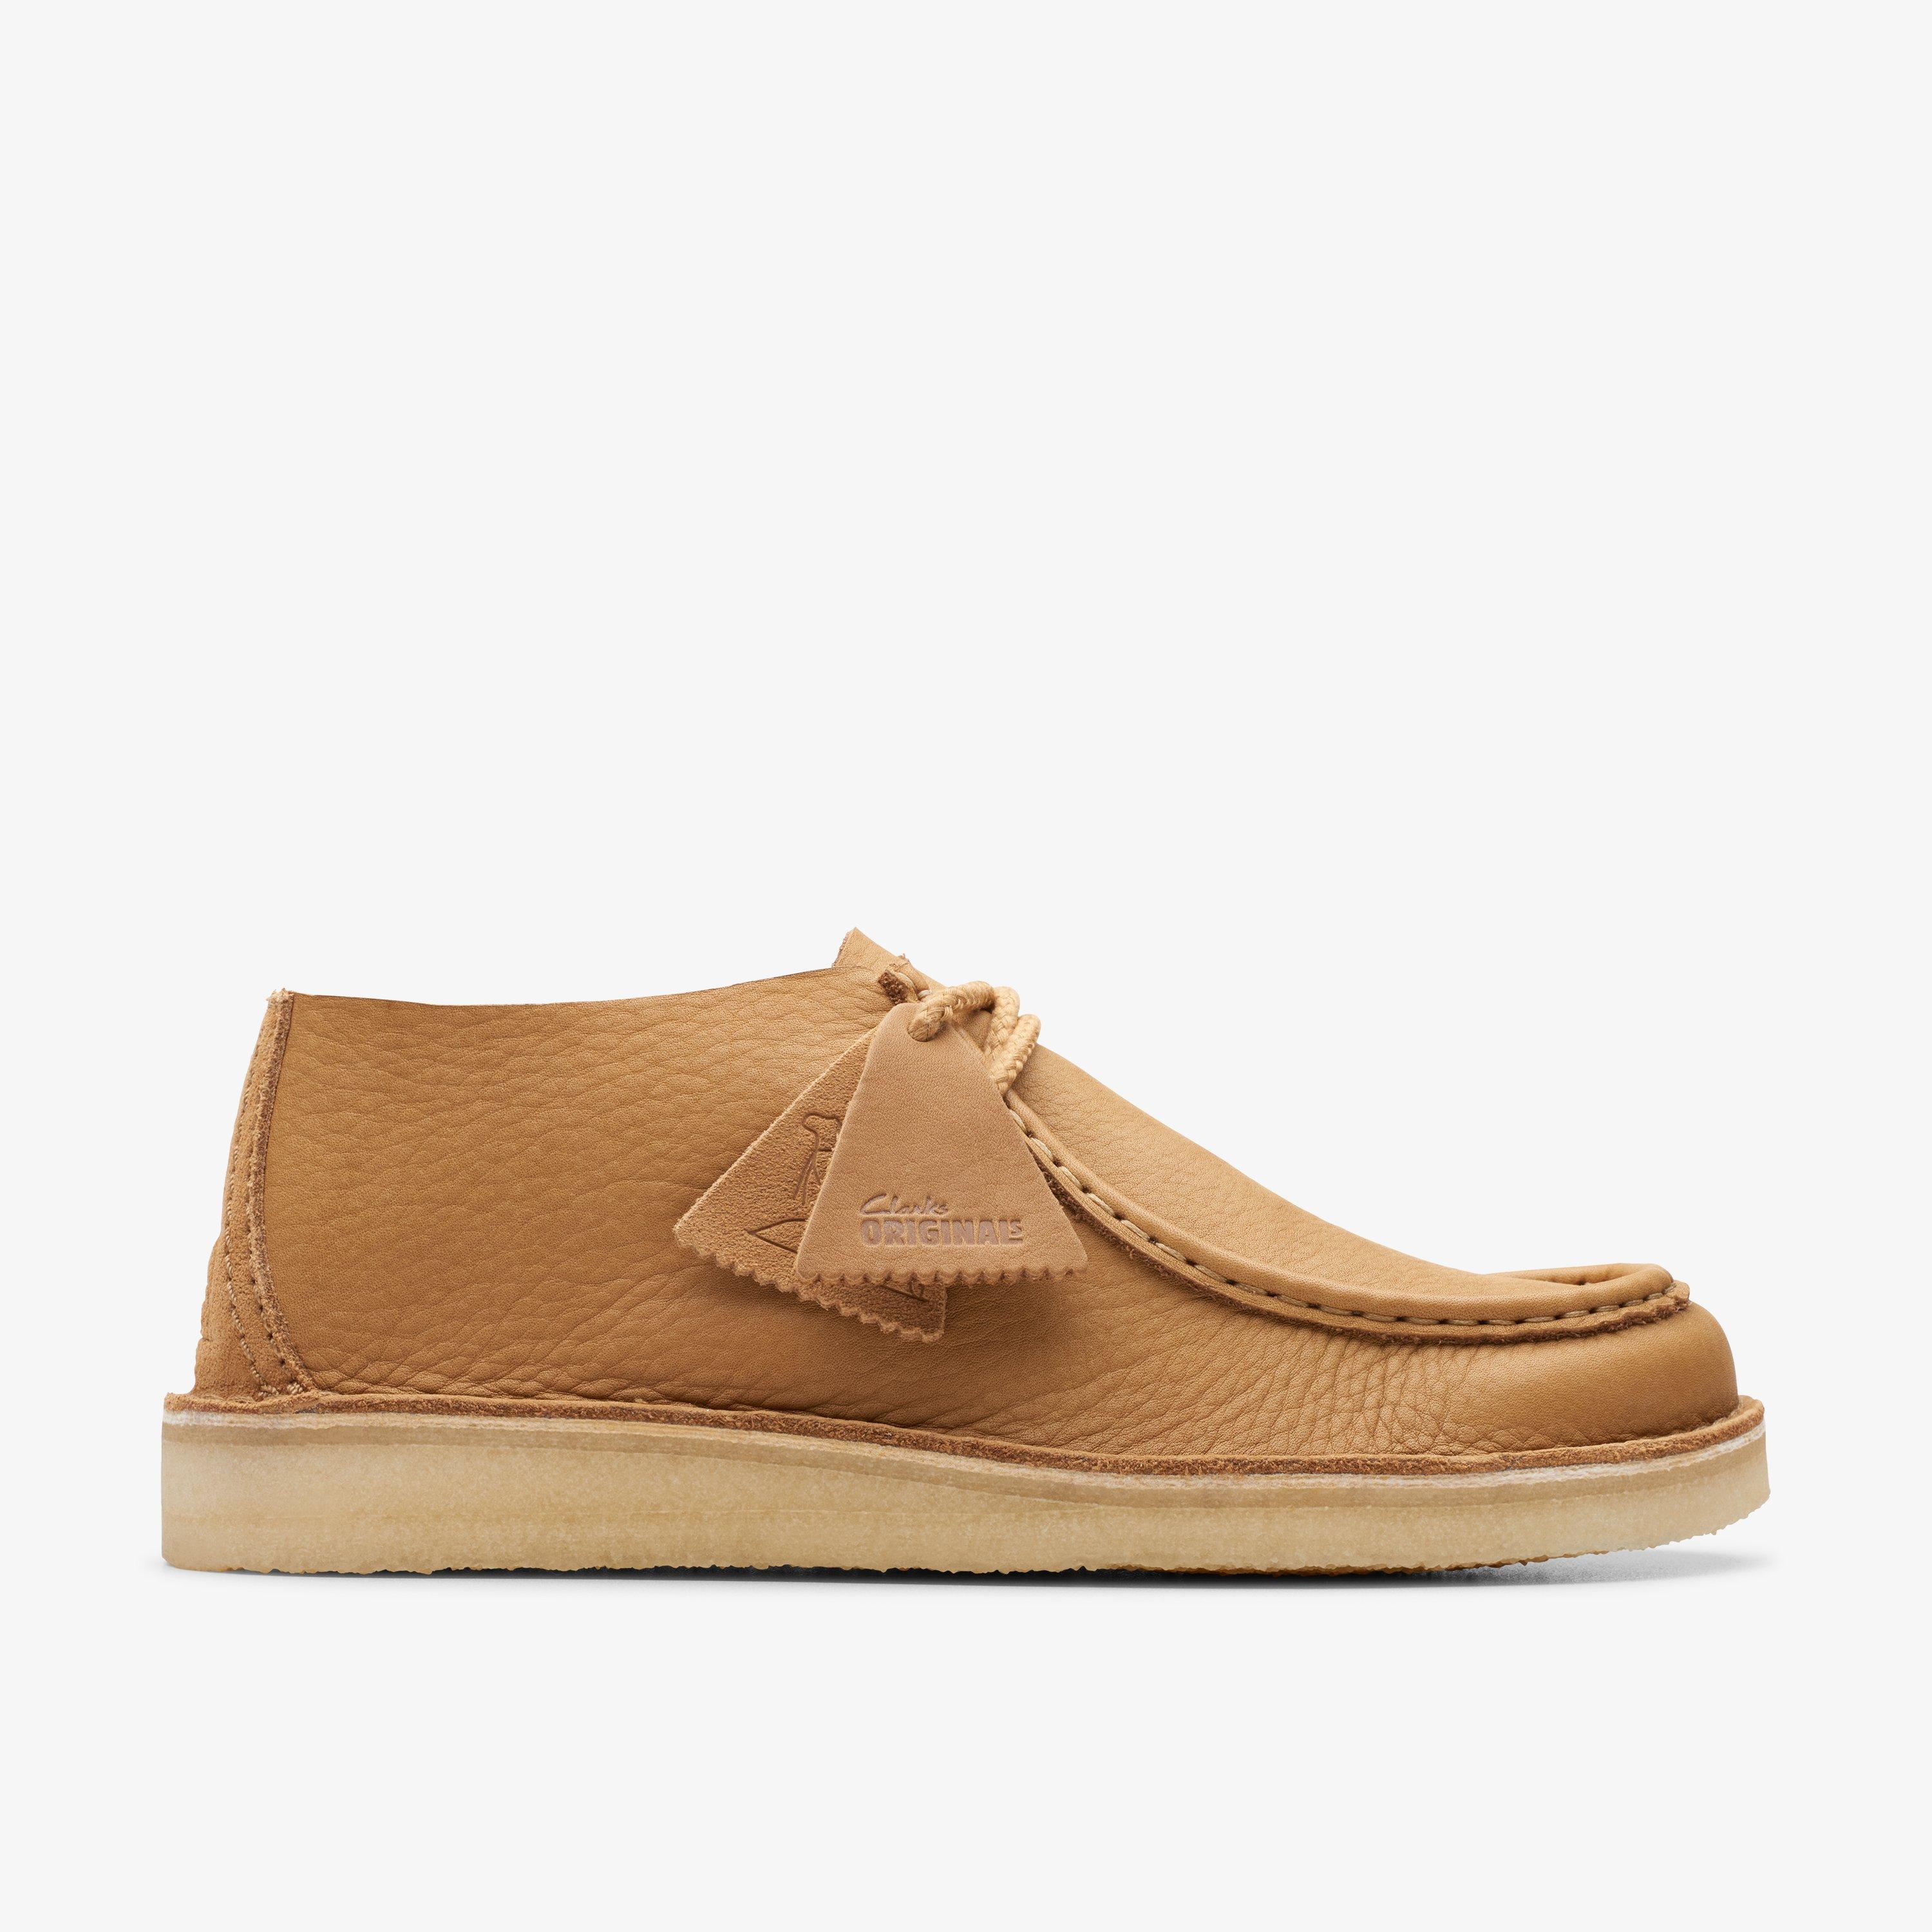 Size 12 Clarks Originals Desert Nomad Mid Tan Leather shoes